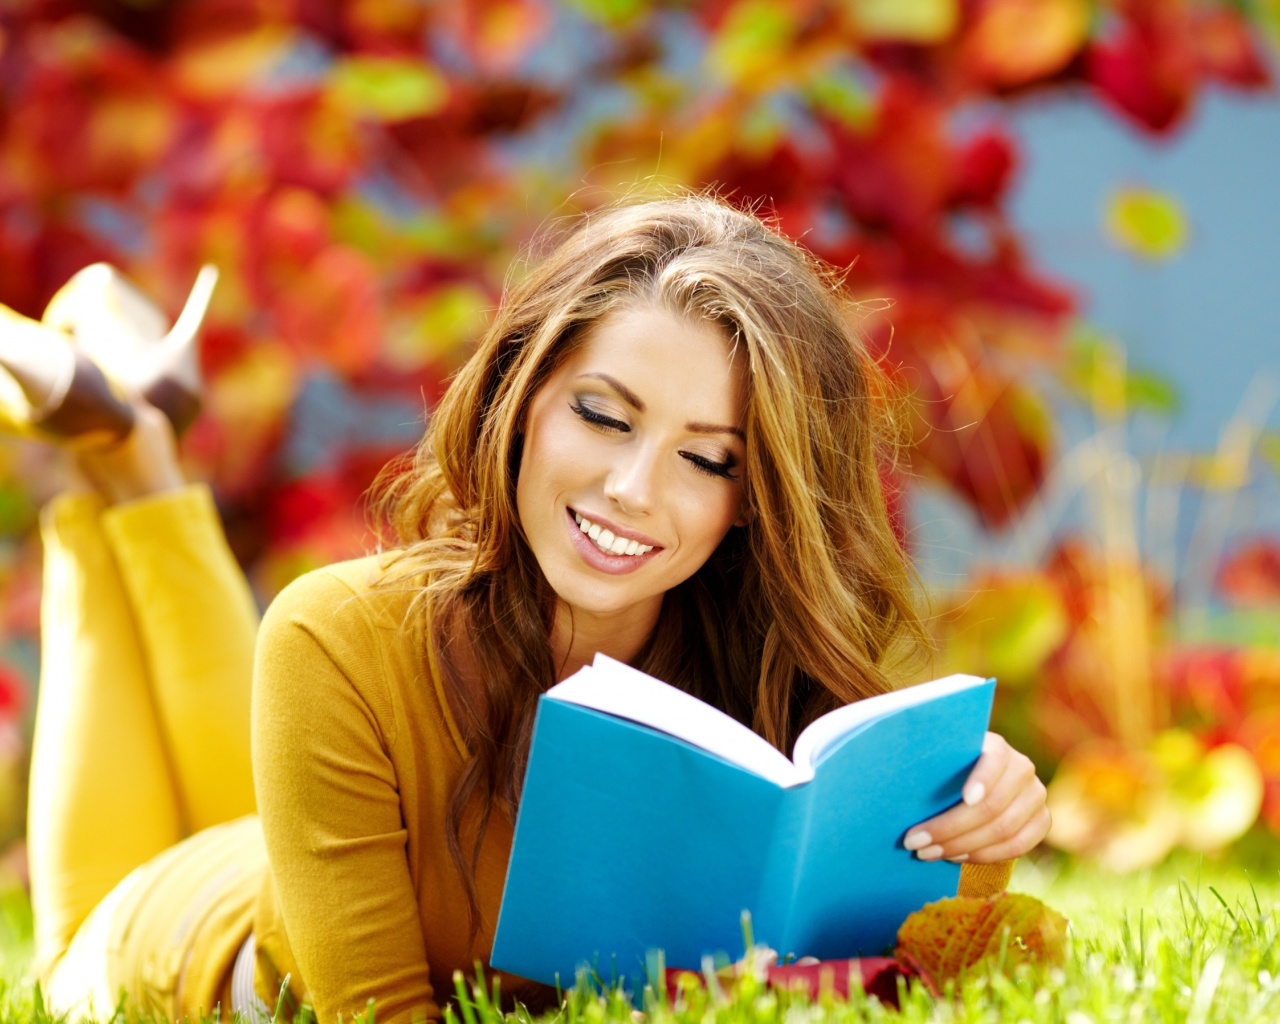 Girl Reading Book in Autumn Park wallpaper 1280x1024